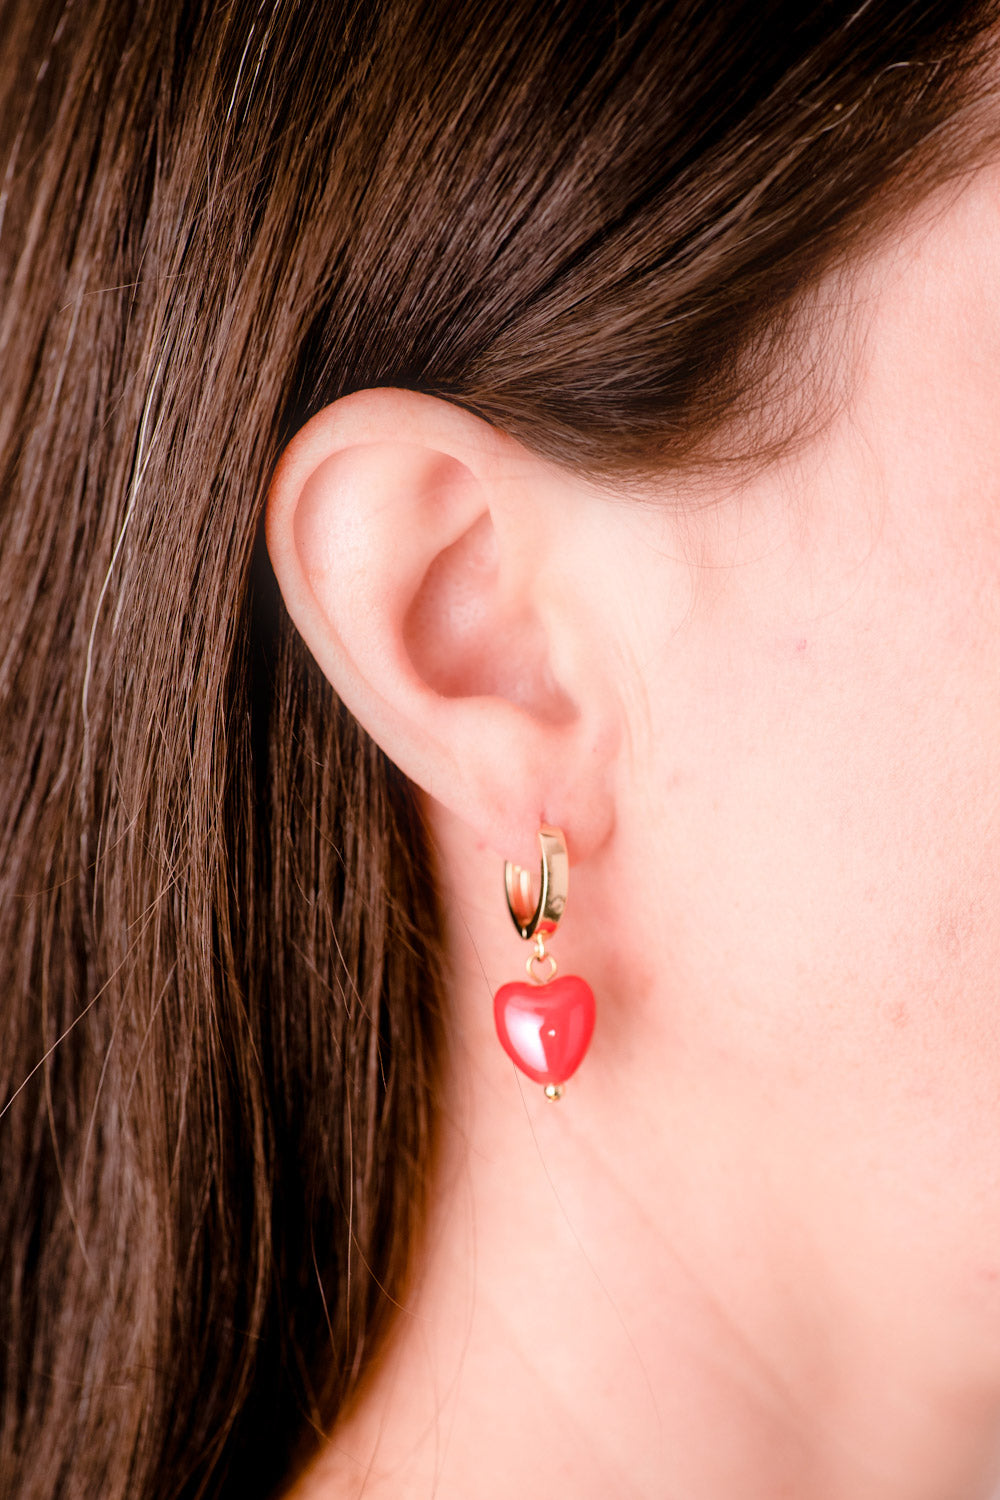 Type 1 Red Hot Hearts Earrings